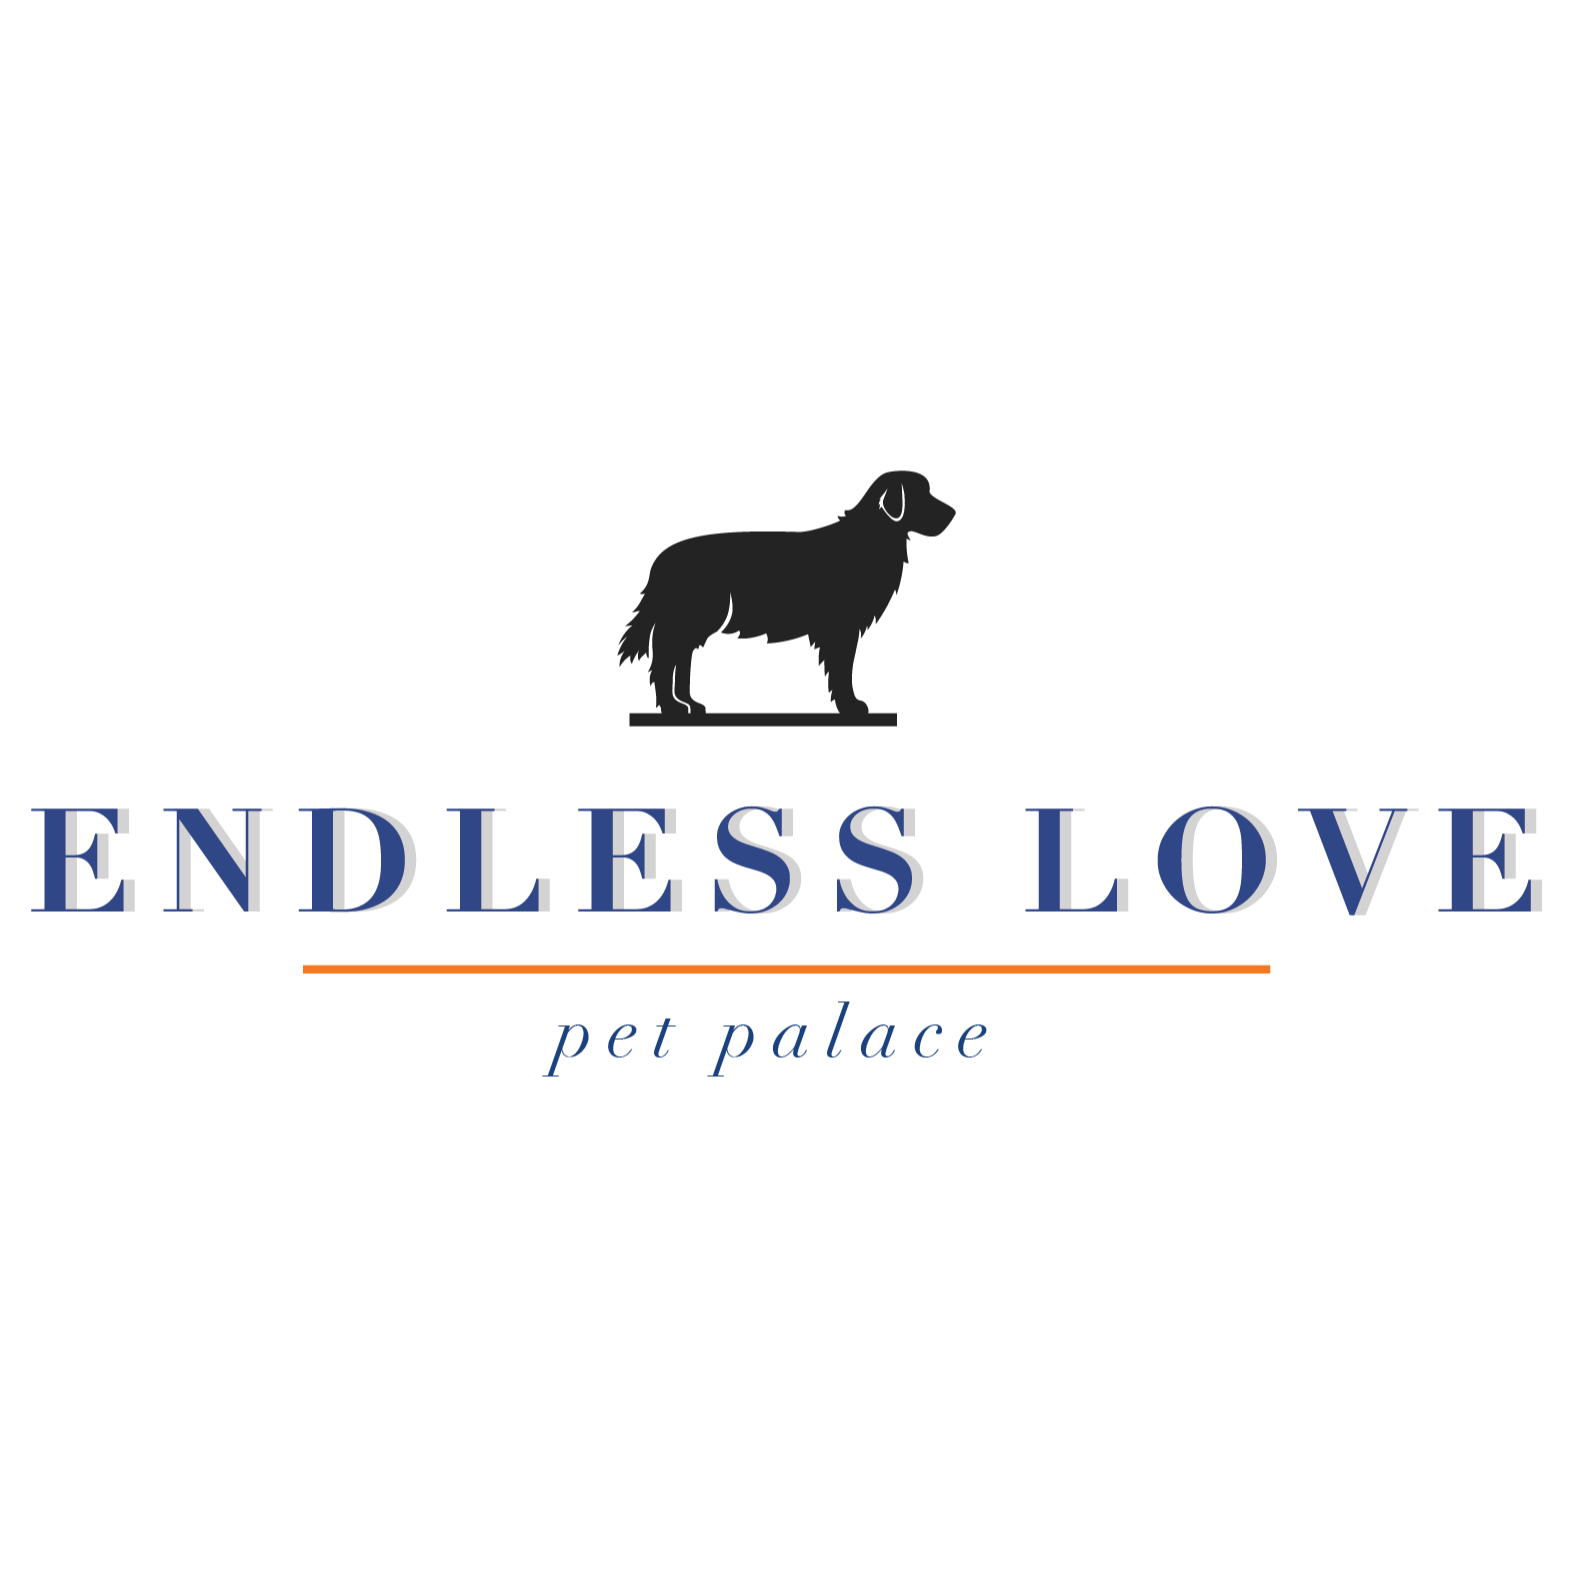 Endless Love Pet Palace